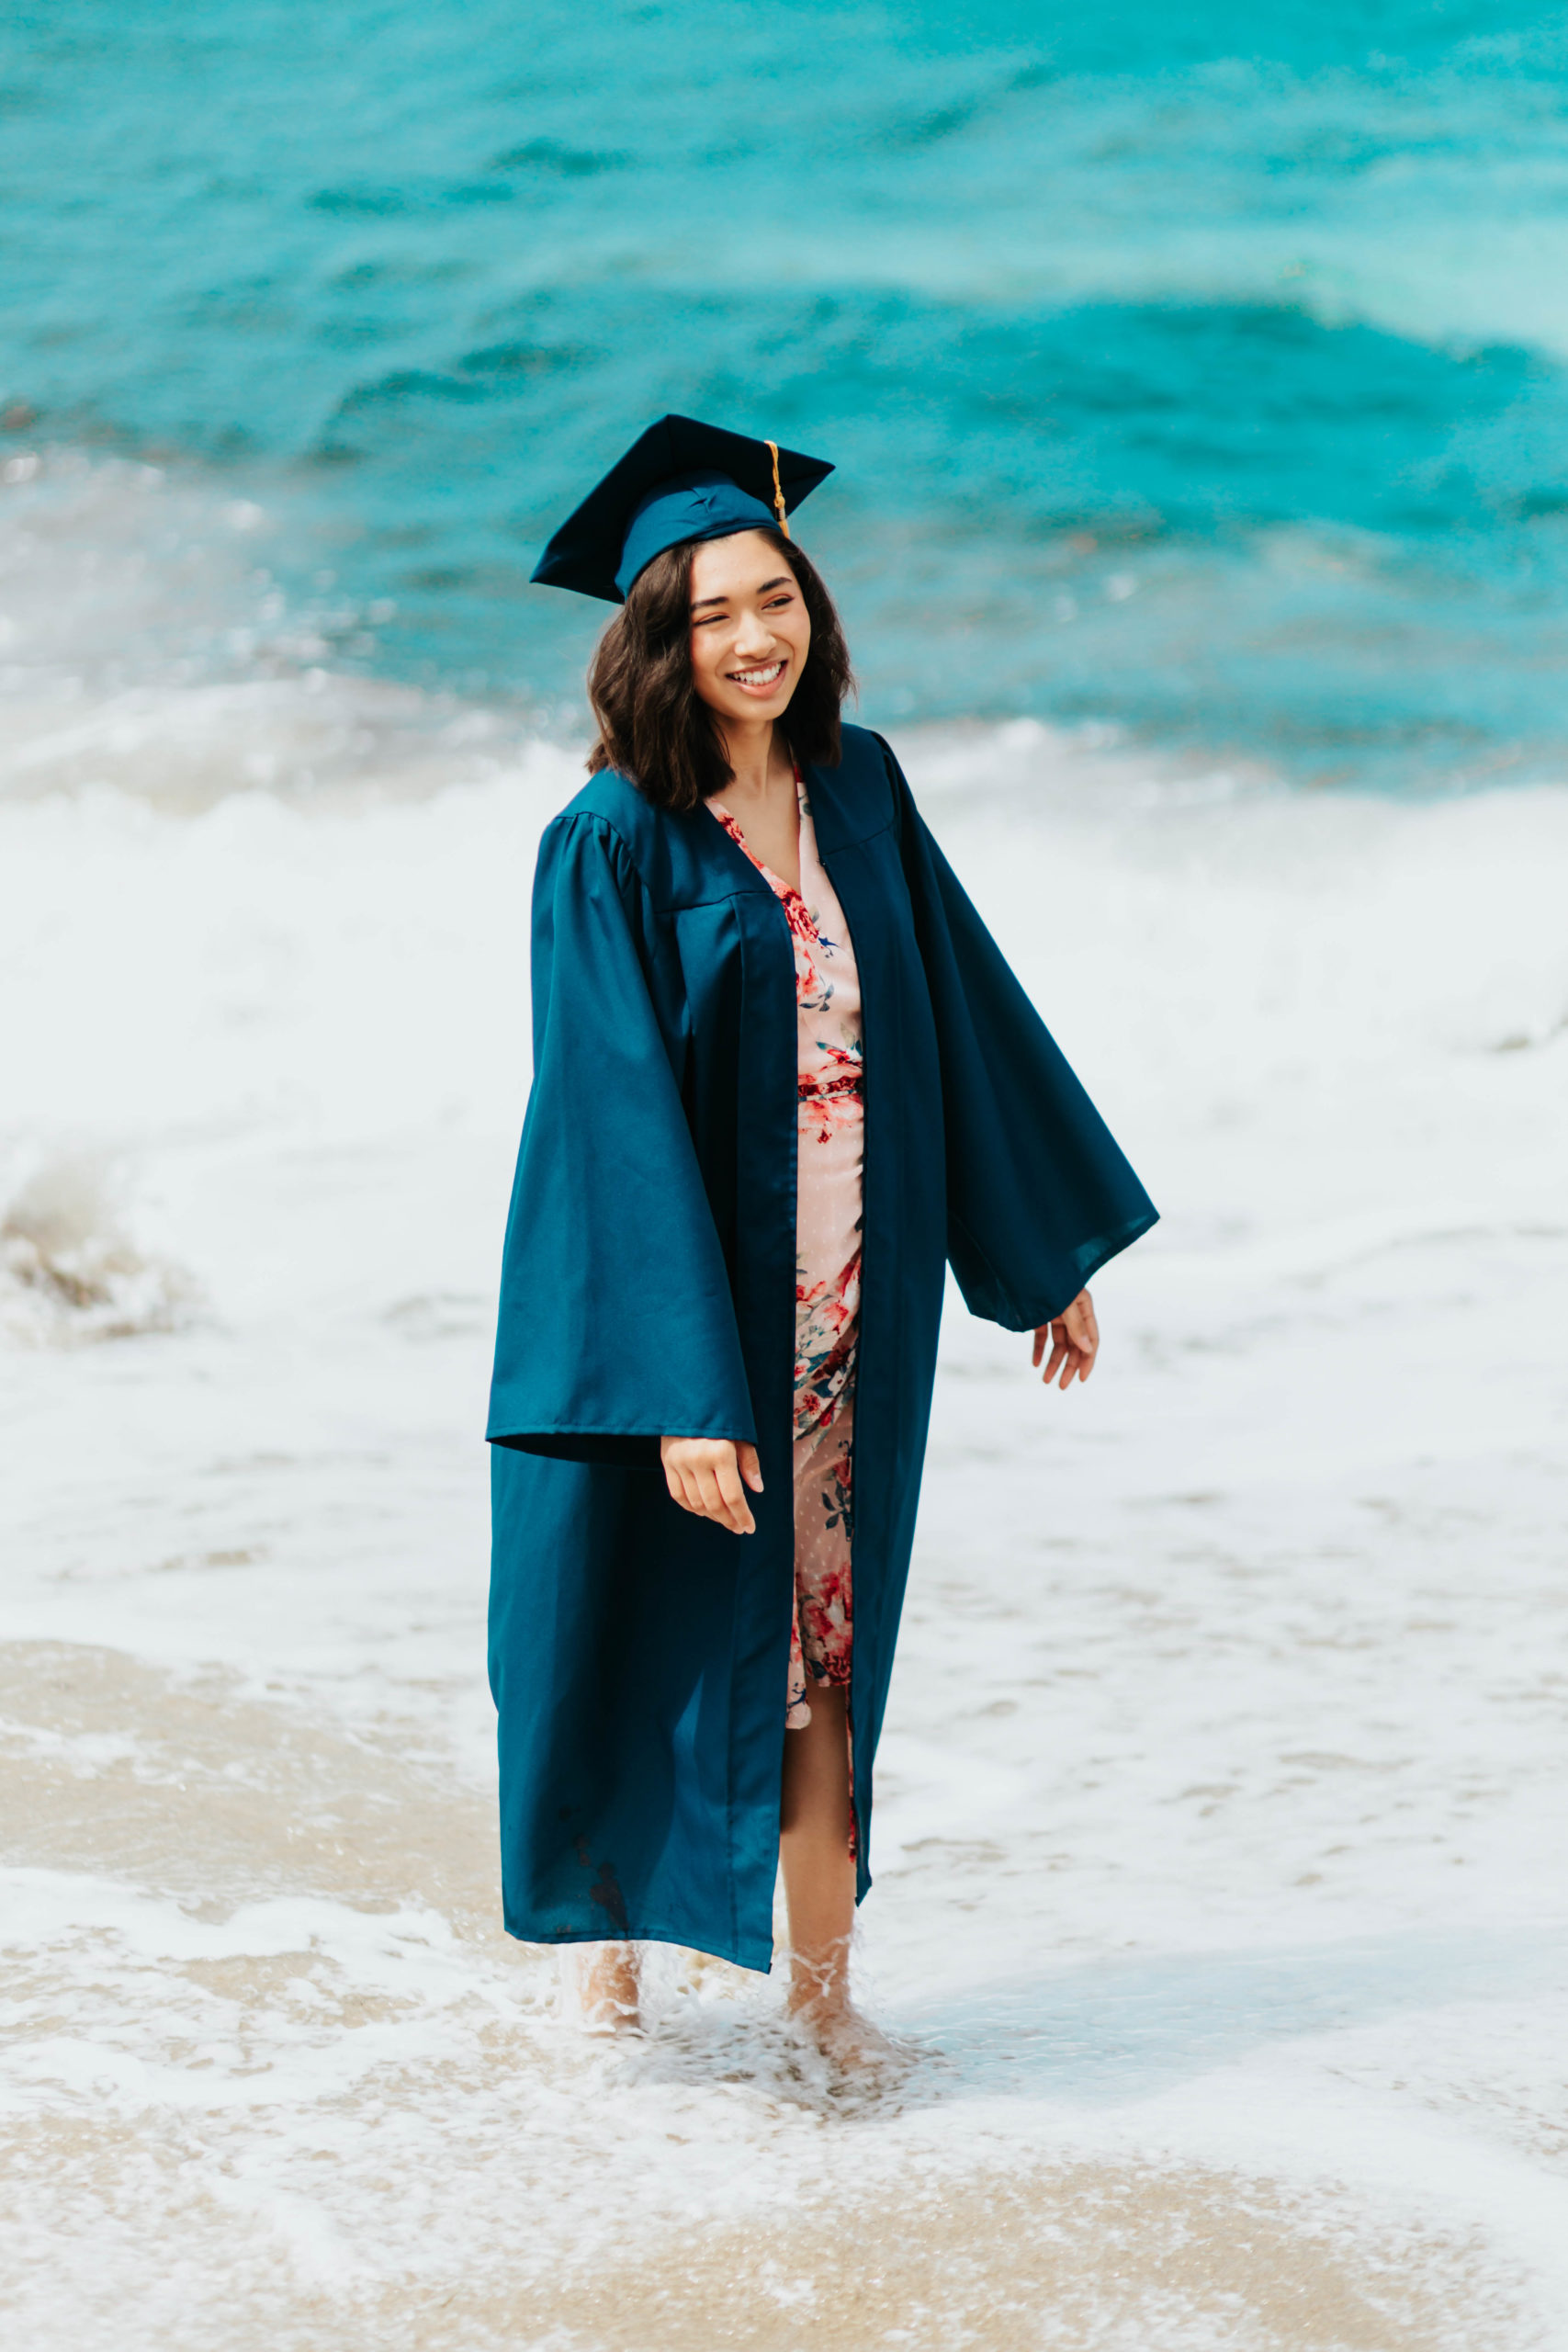 High school graduate walking on beach